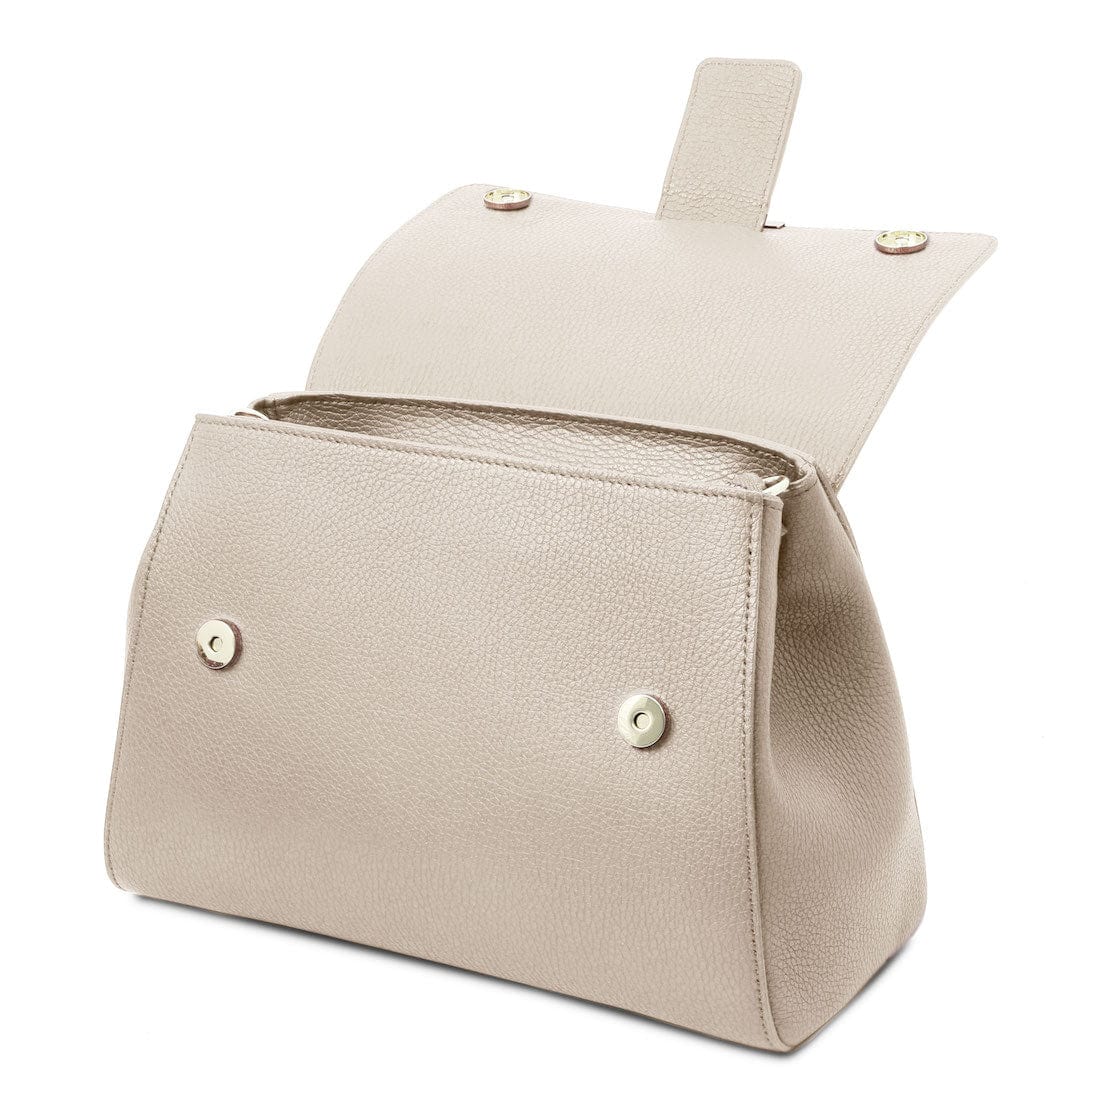 TL Bag - Leather handbag | TL142156 - Premium Leather handbags - Just €143.96! Shop now at San Rocco Italia